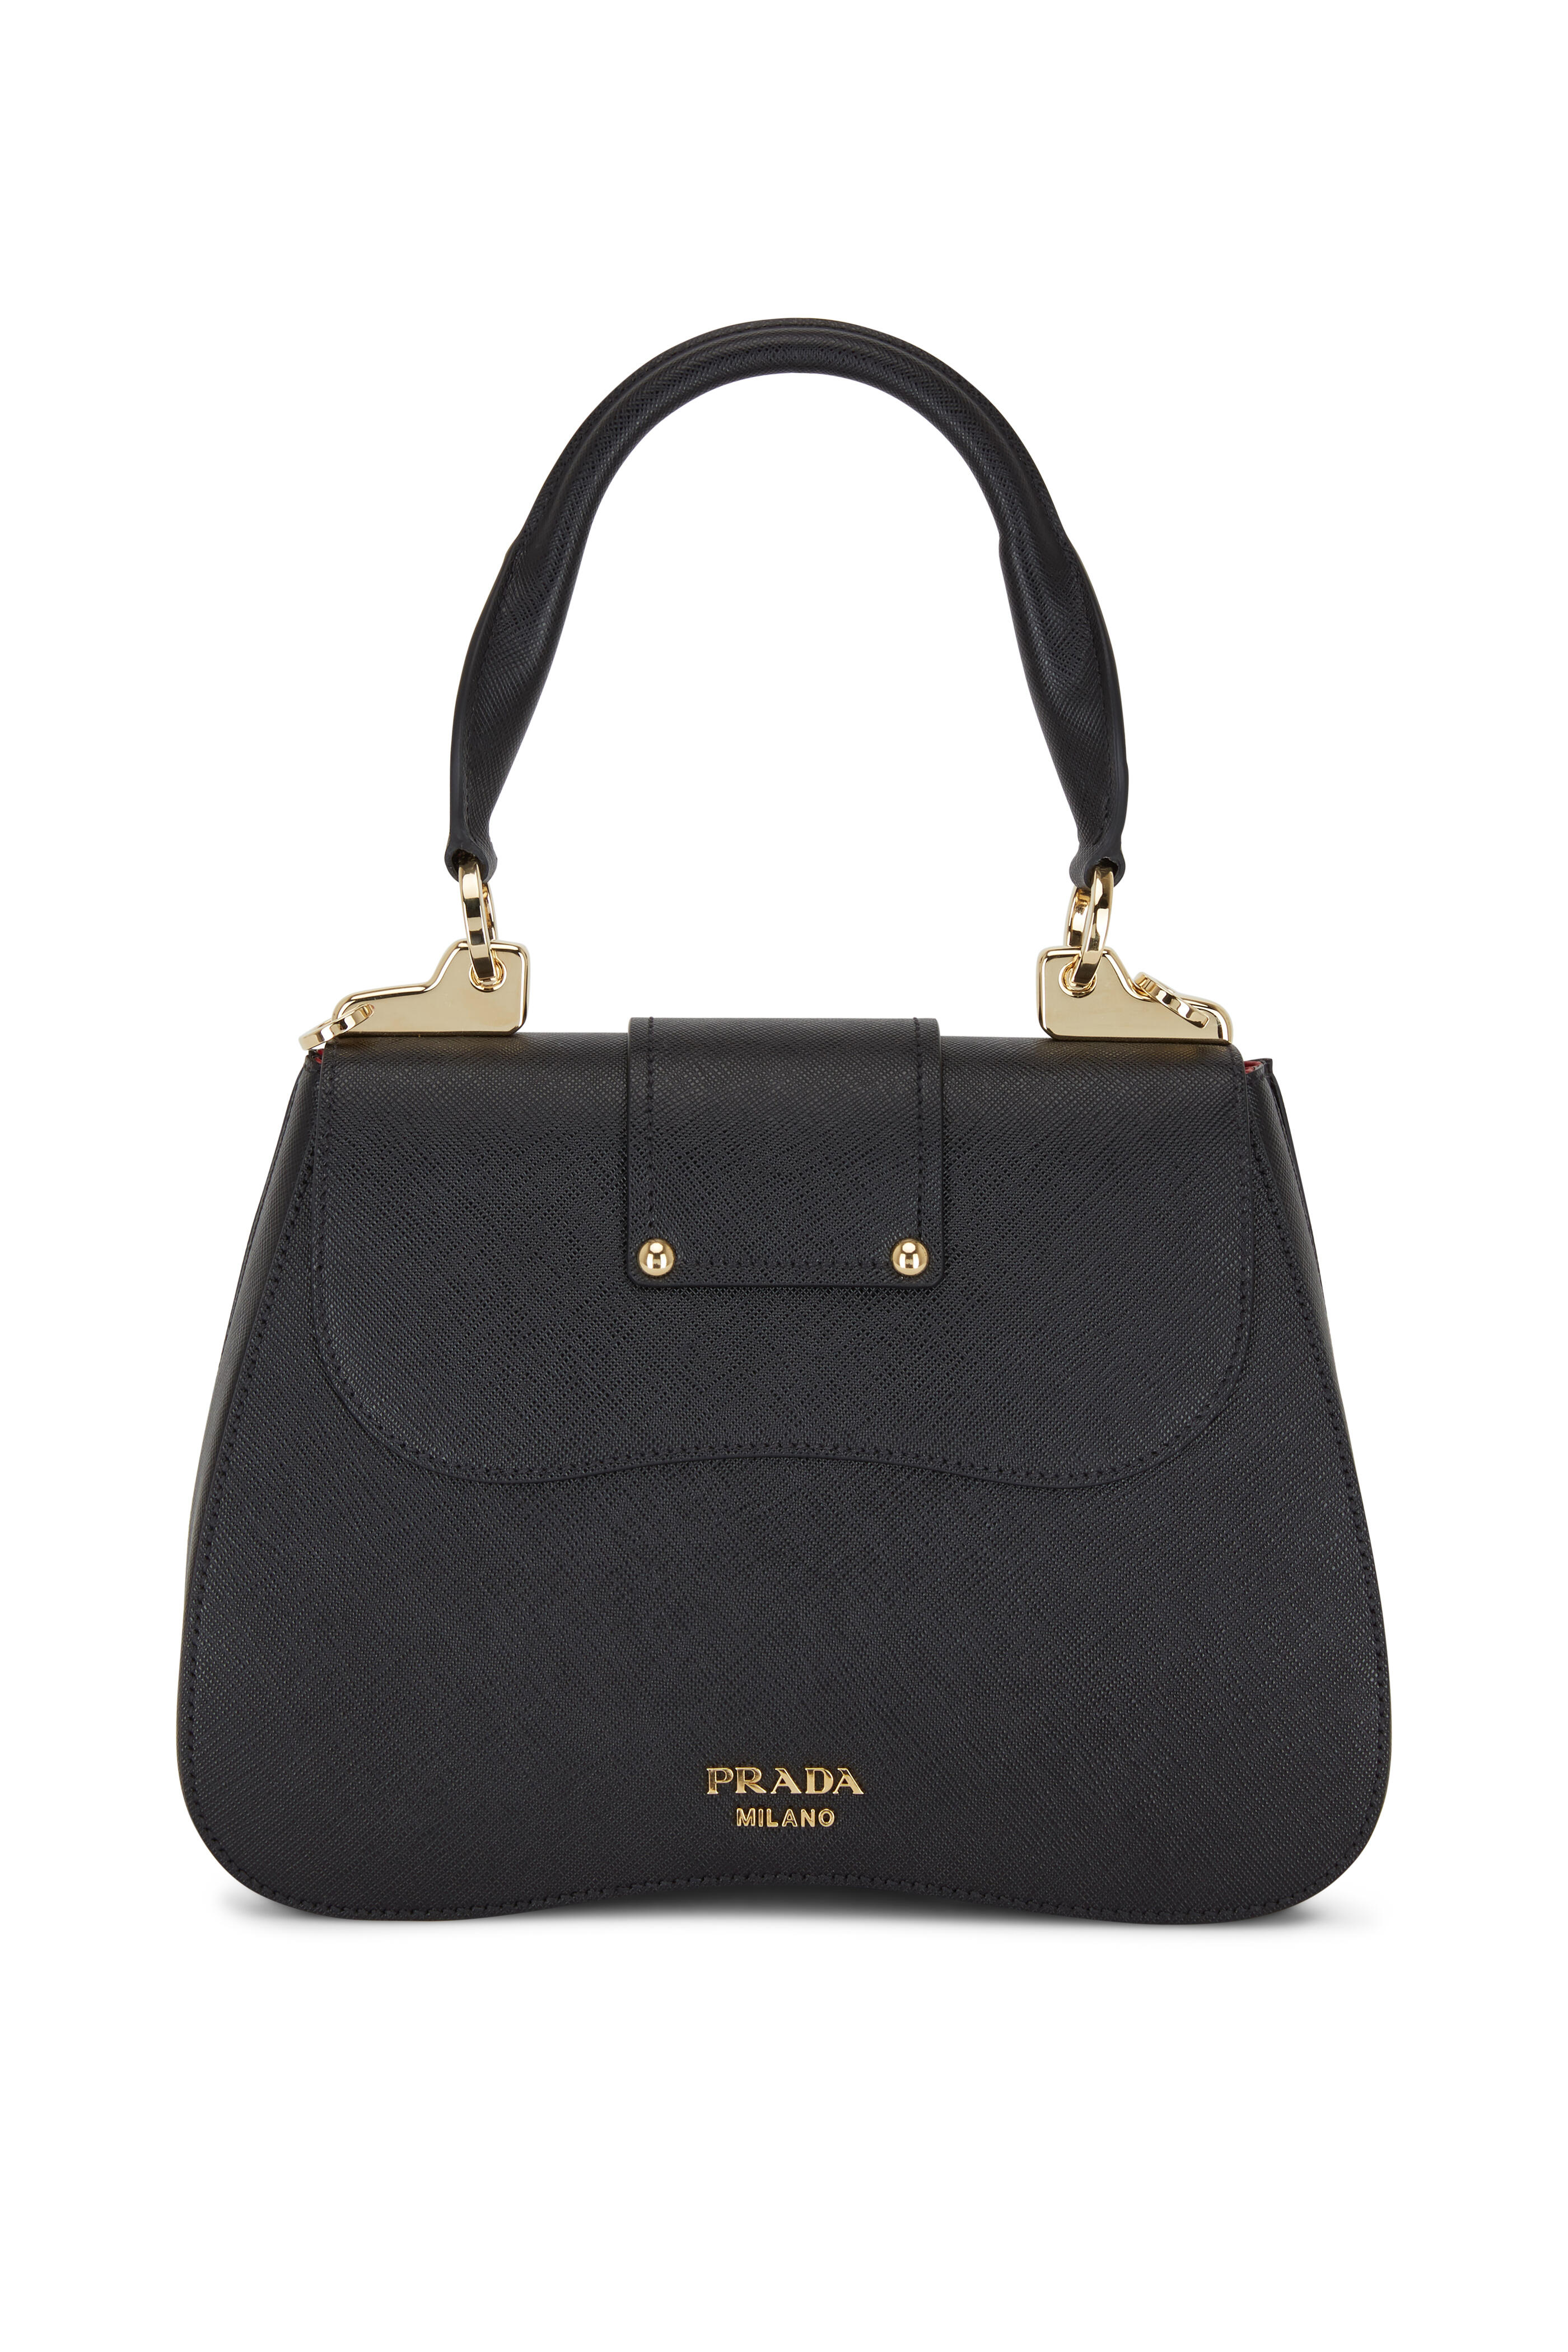 Prada Women's Saffiano Leather Top-Handle Bag